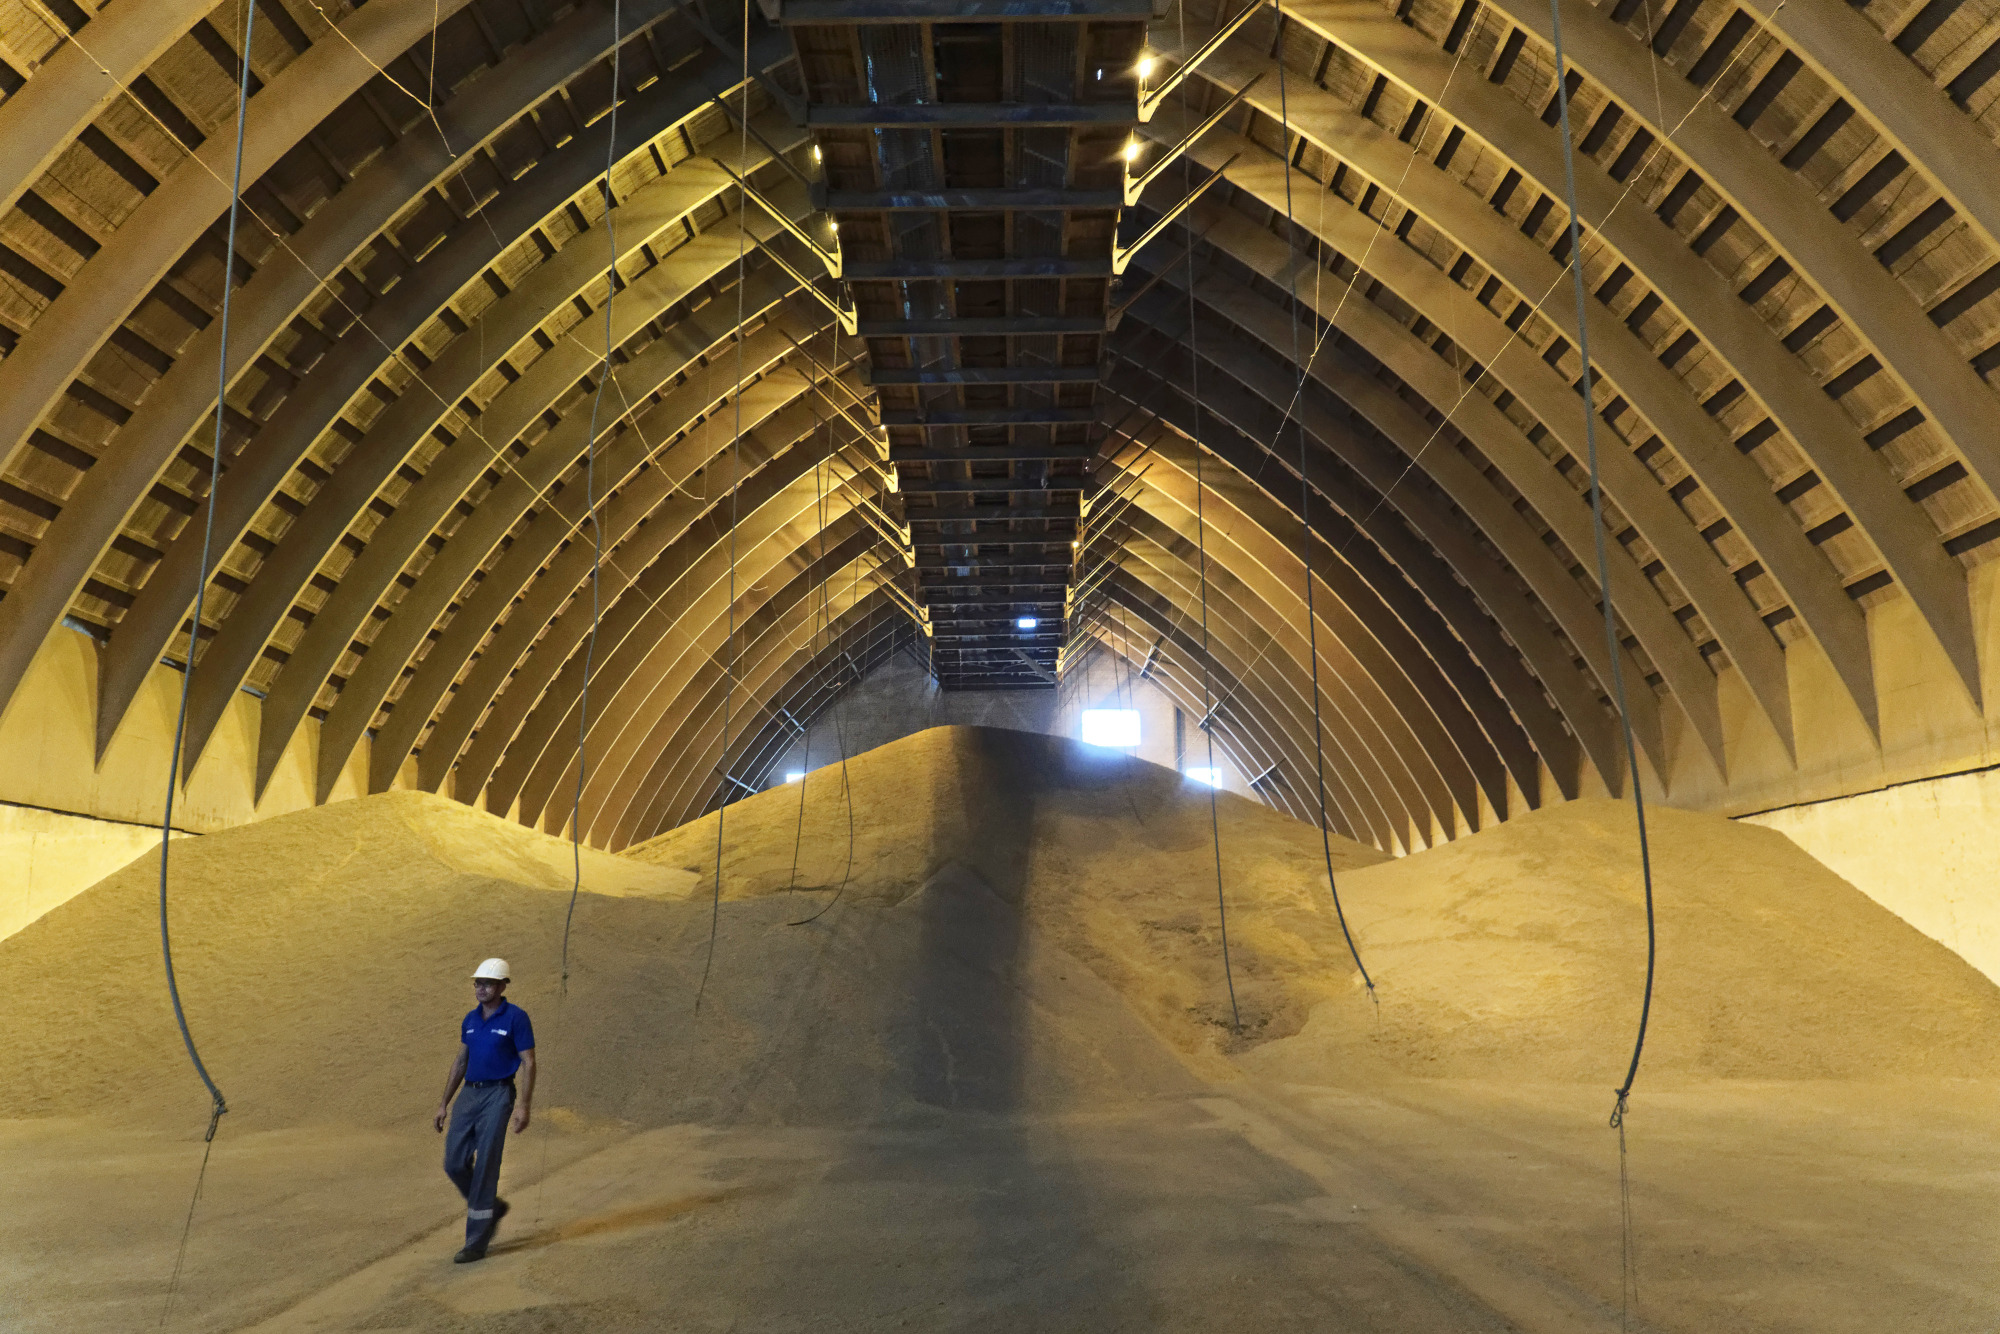 Bunge's grain storage facility in Ukraine